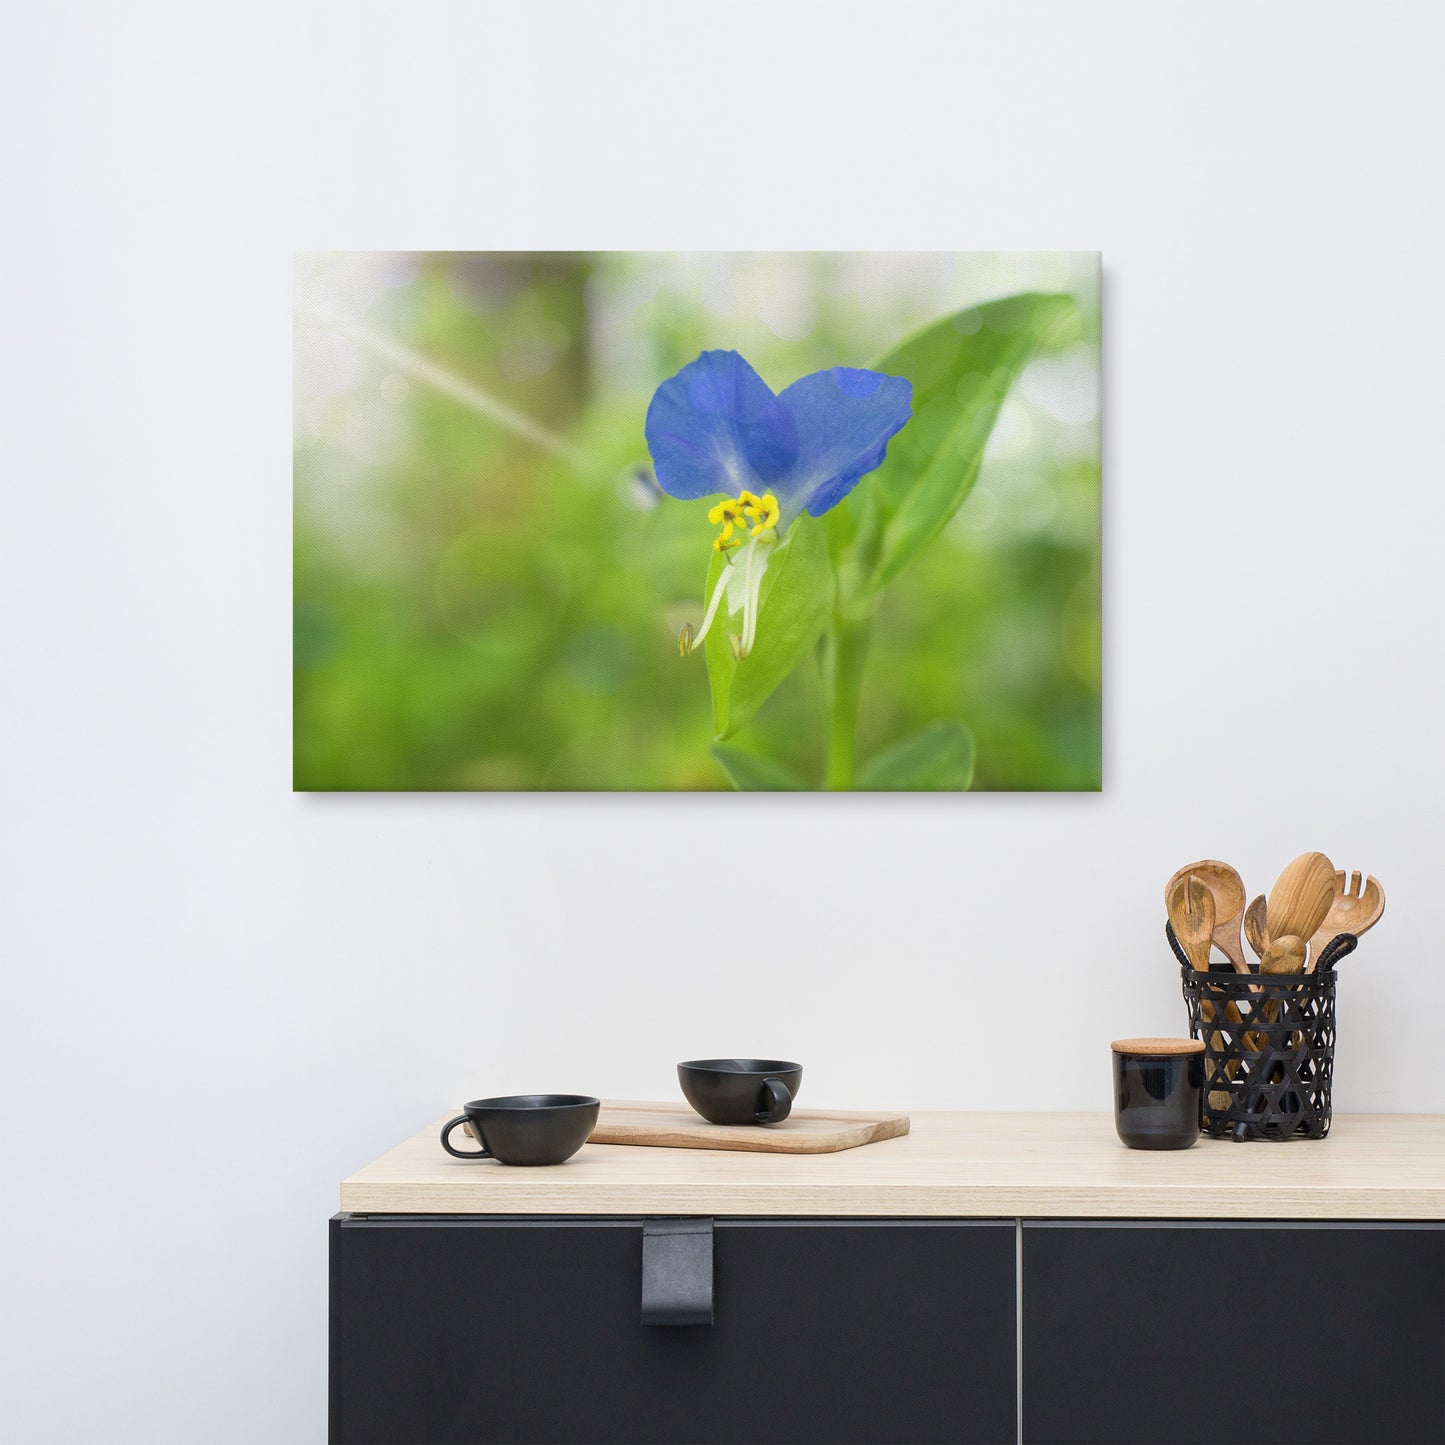 Dark Blue Wall Kitchen: Little Purple and White Flower Bloom - Botanical / Floral / Flora / Flowers / Nature Photograph Canvas Wall Art Print - Artwork